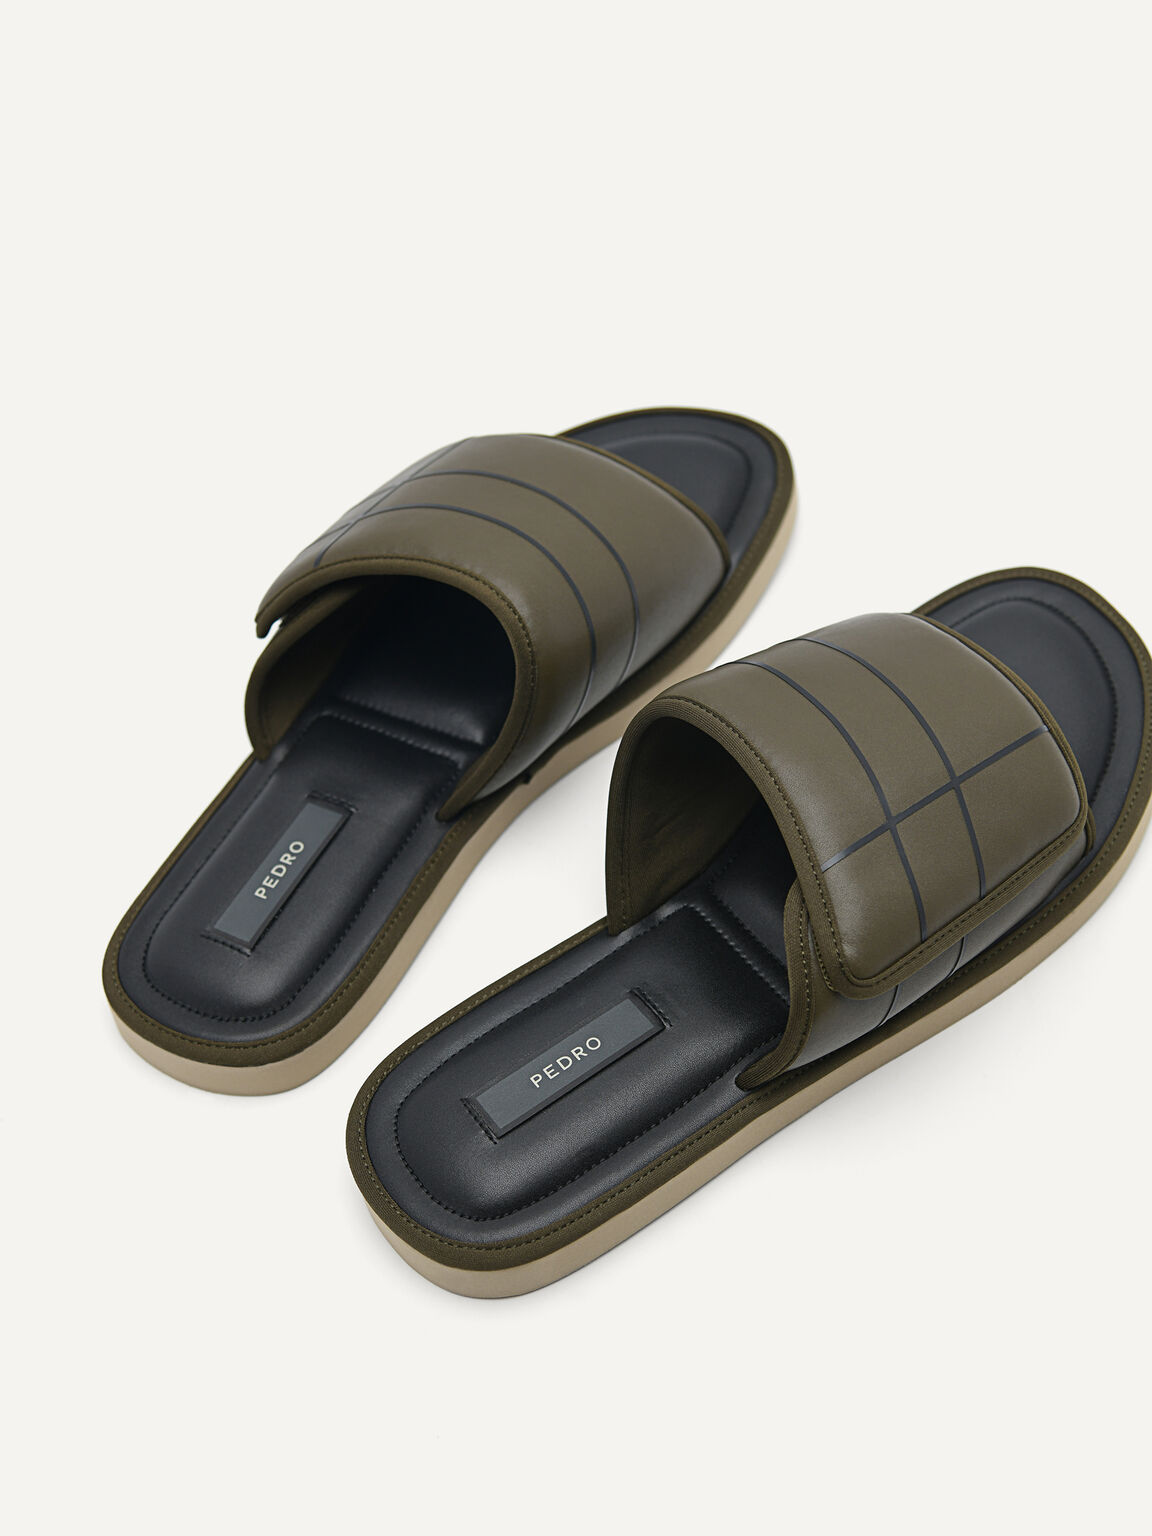 Slide Sandals, Military Green